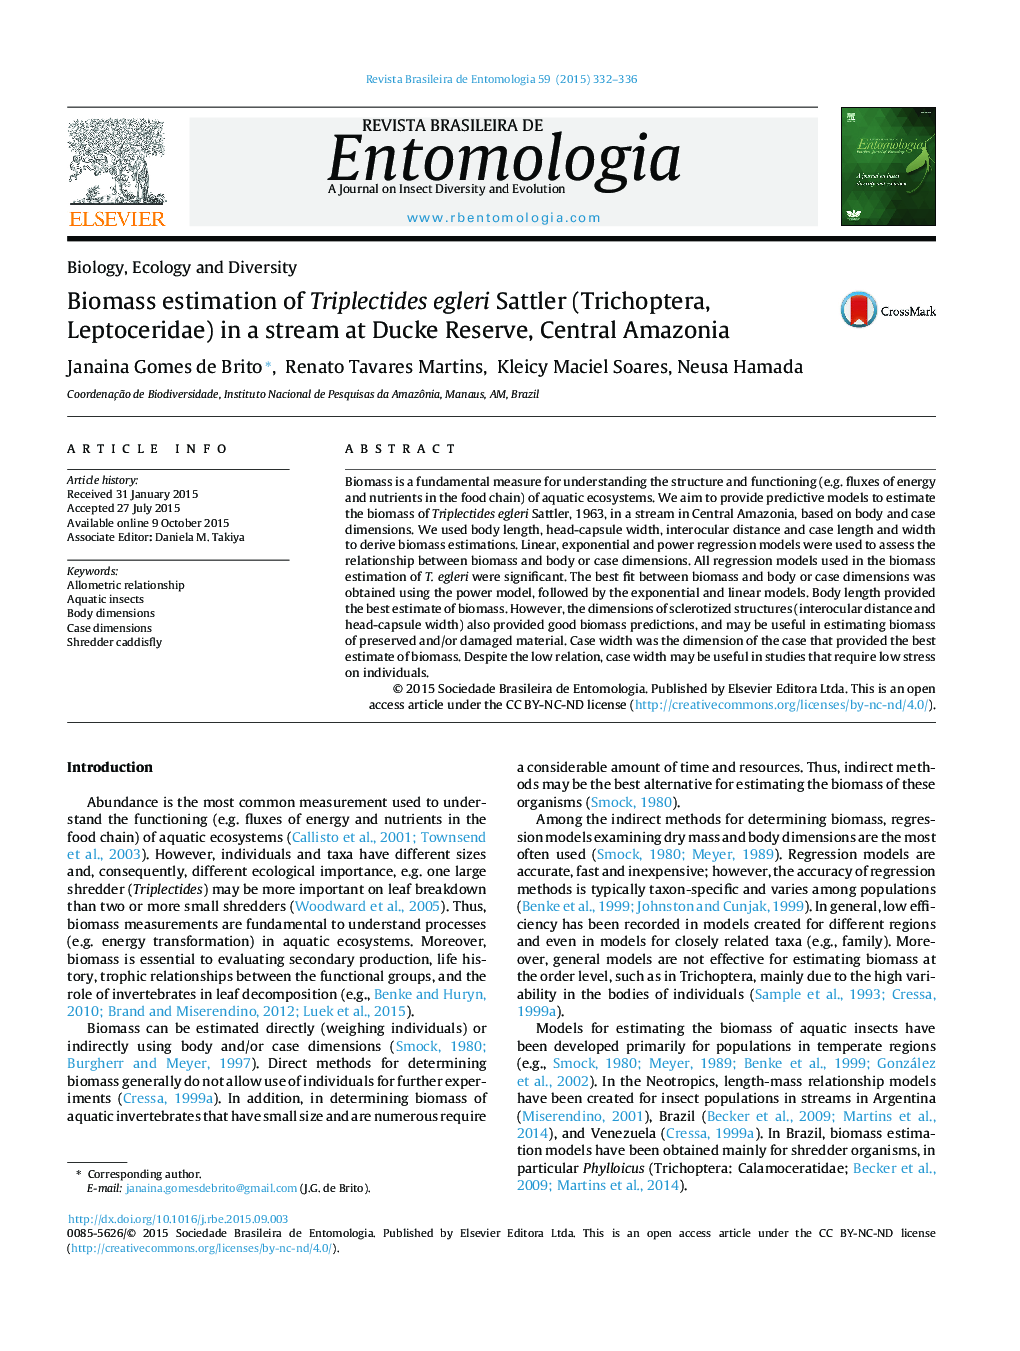 Biomass estimation of Triplectides egleri Sattler (Trichoptera, Leptoceridae) in a stream at Ducke Reserve, Central Amazonia